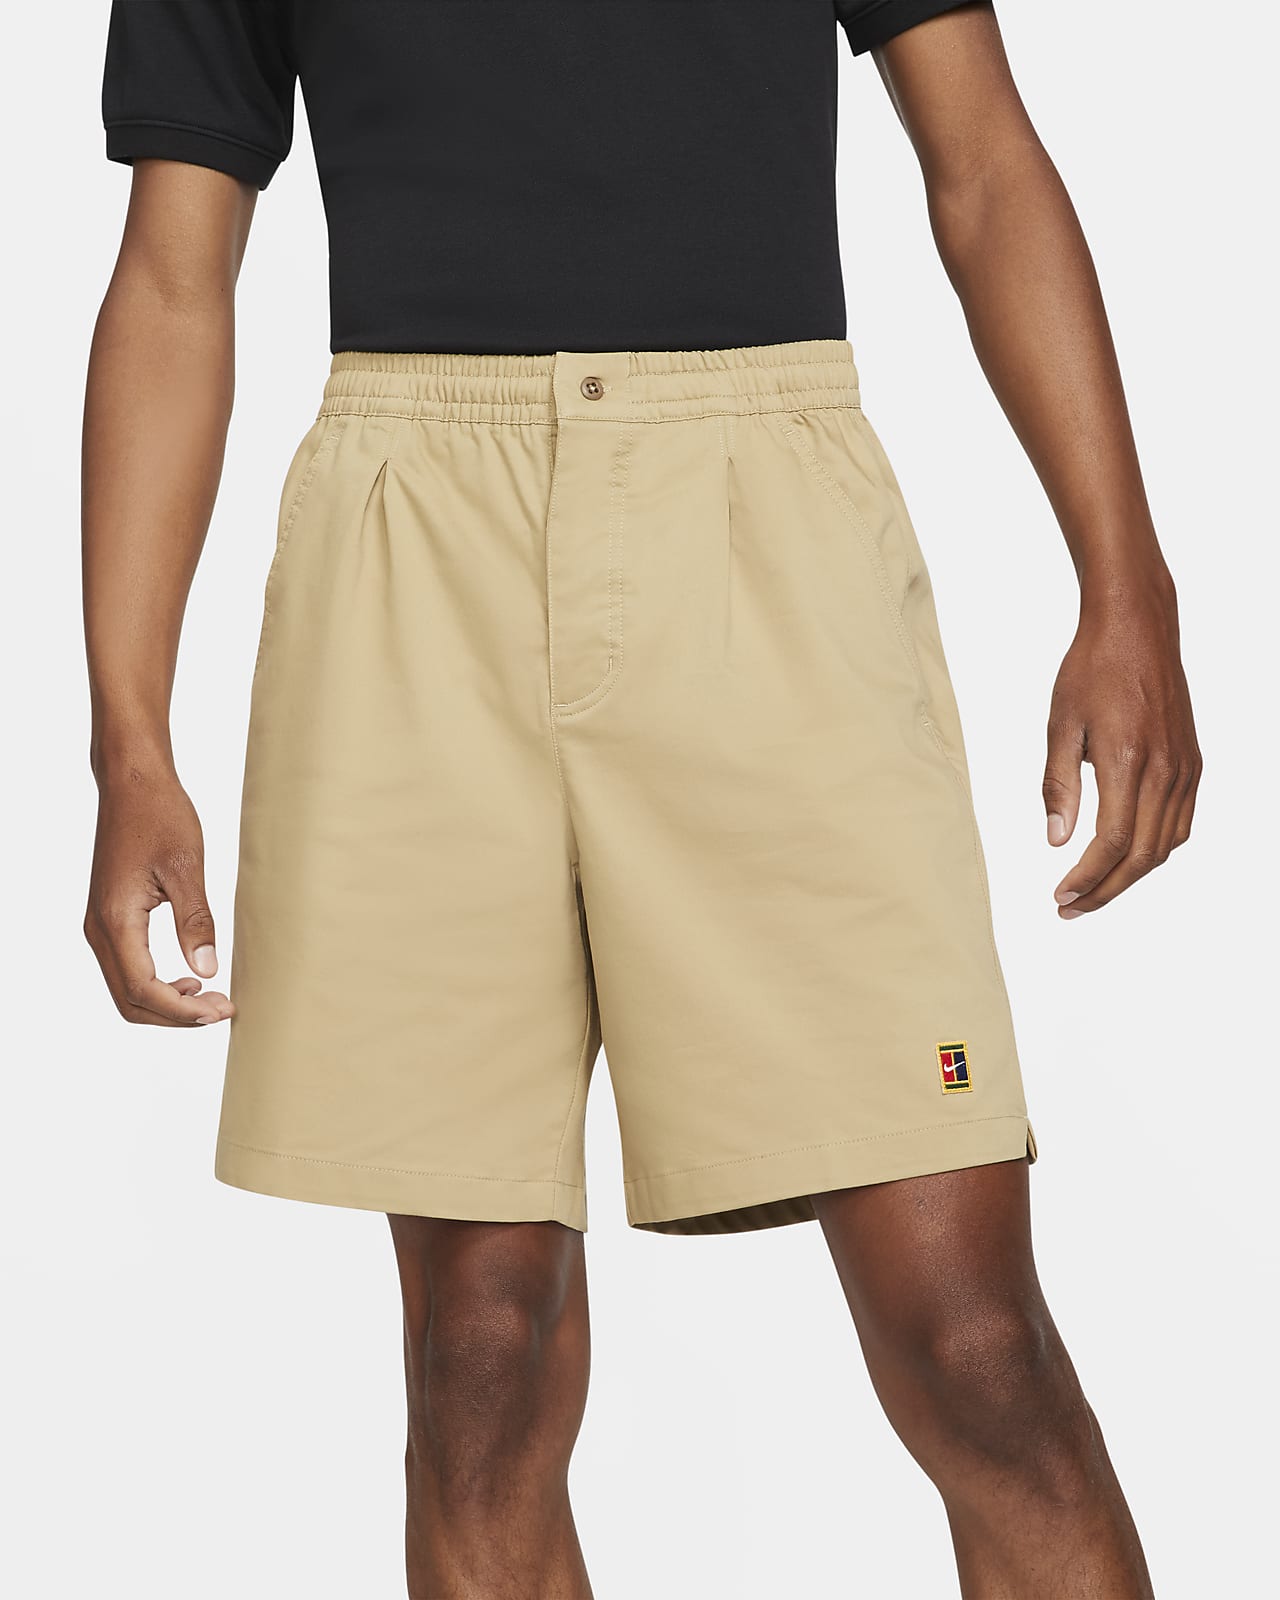 nike tennis mens shorts